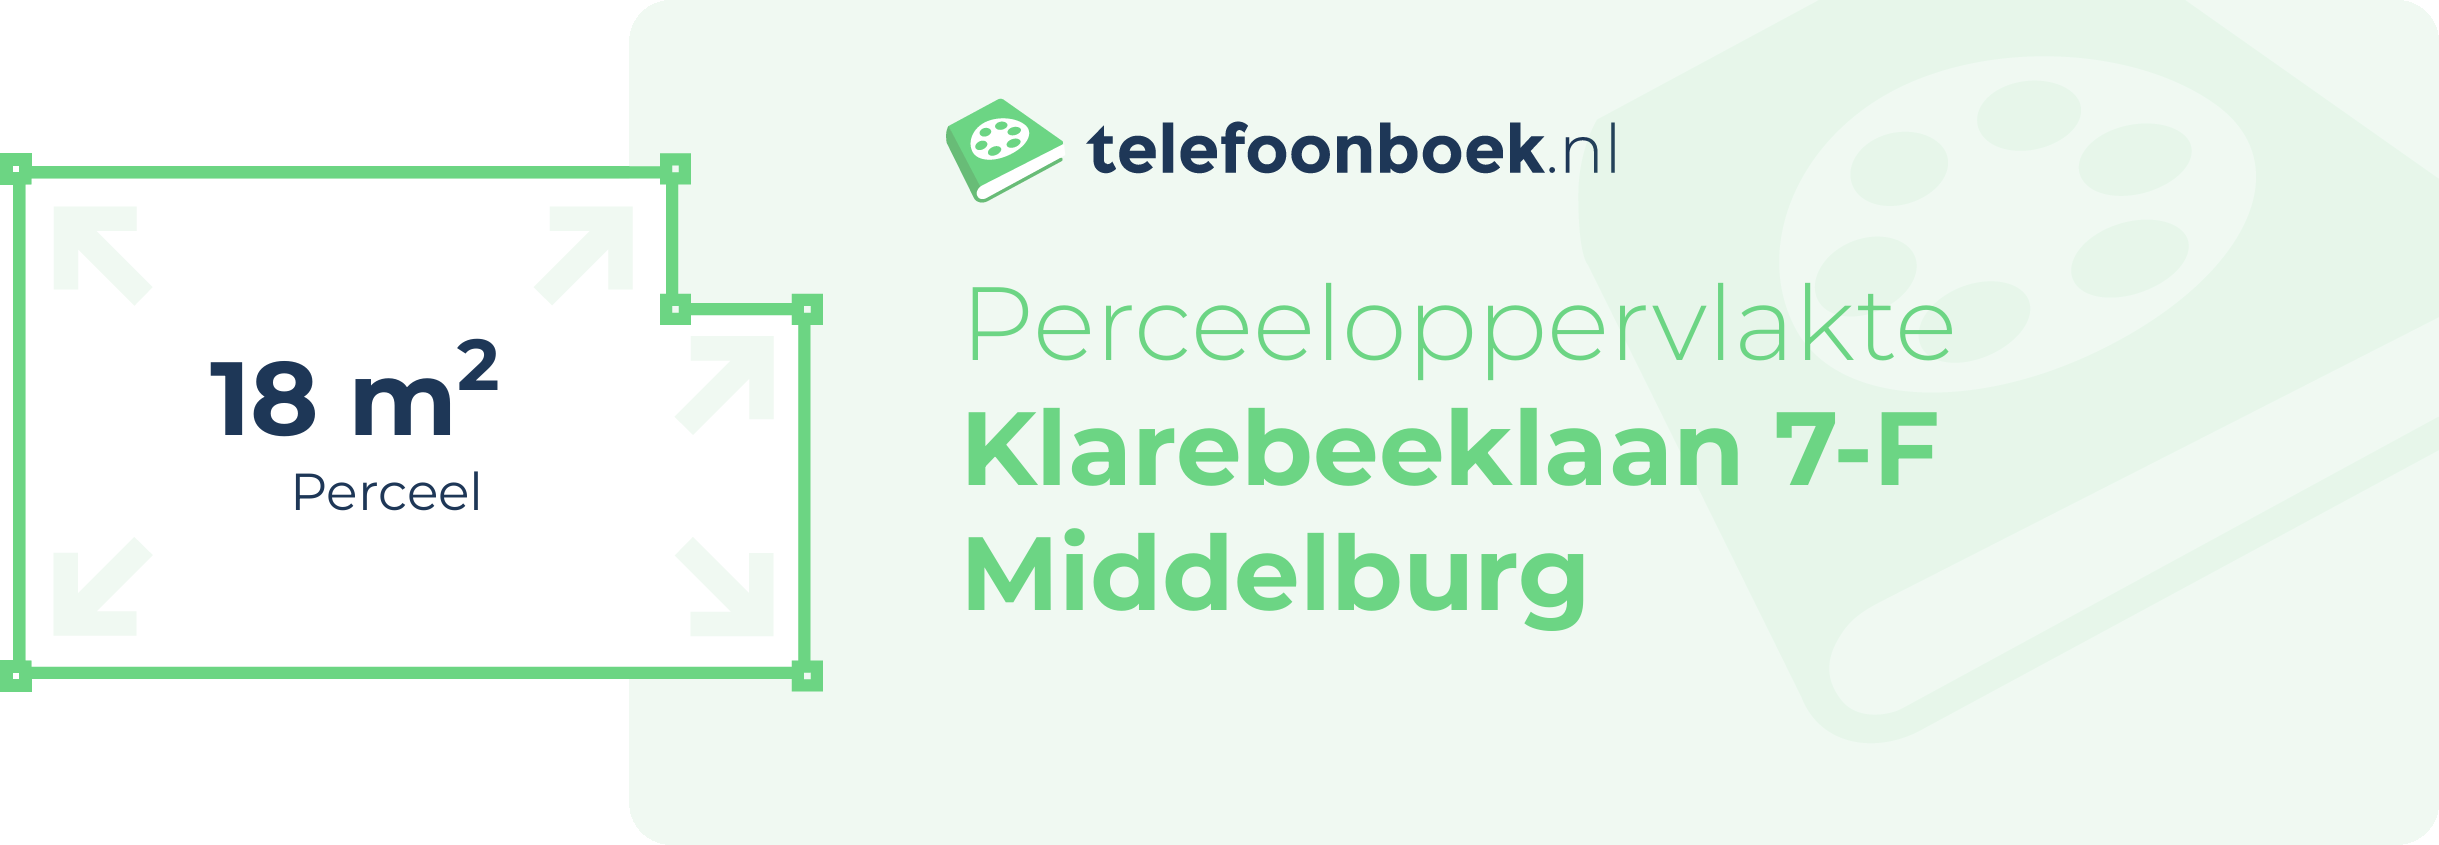 Perceeloppervlakte Klarebeeklaan 7-F Middelburg